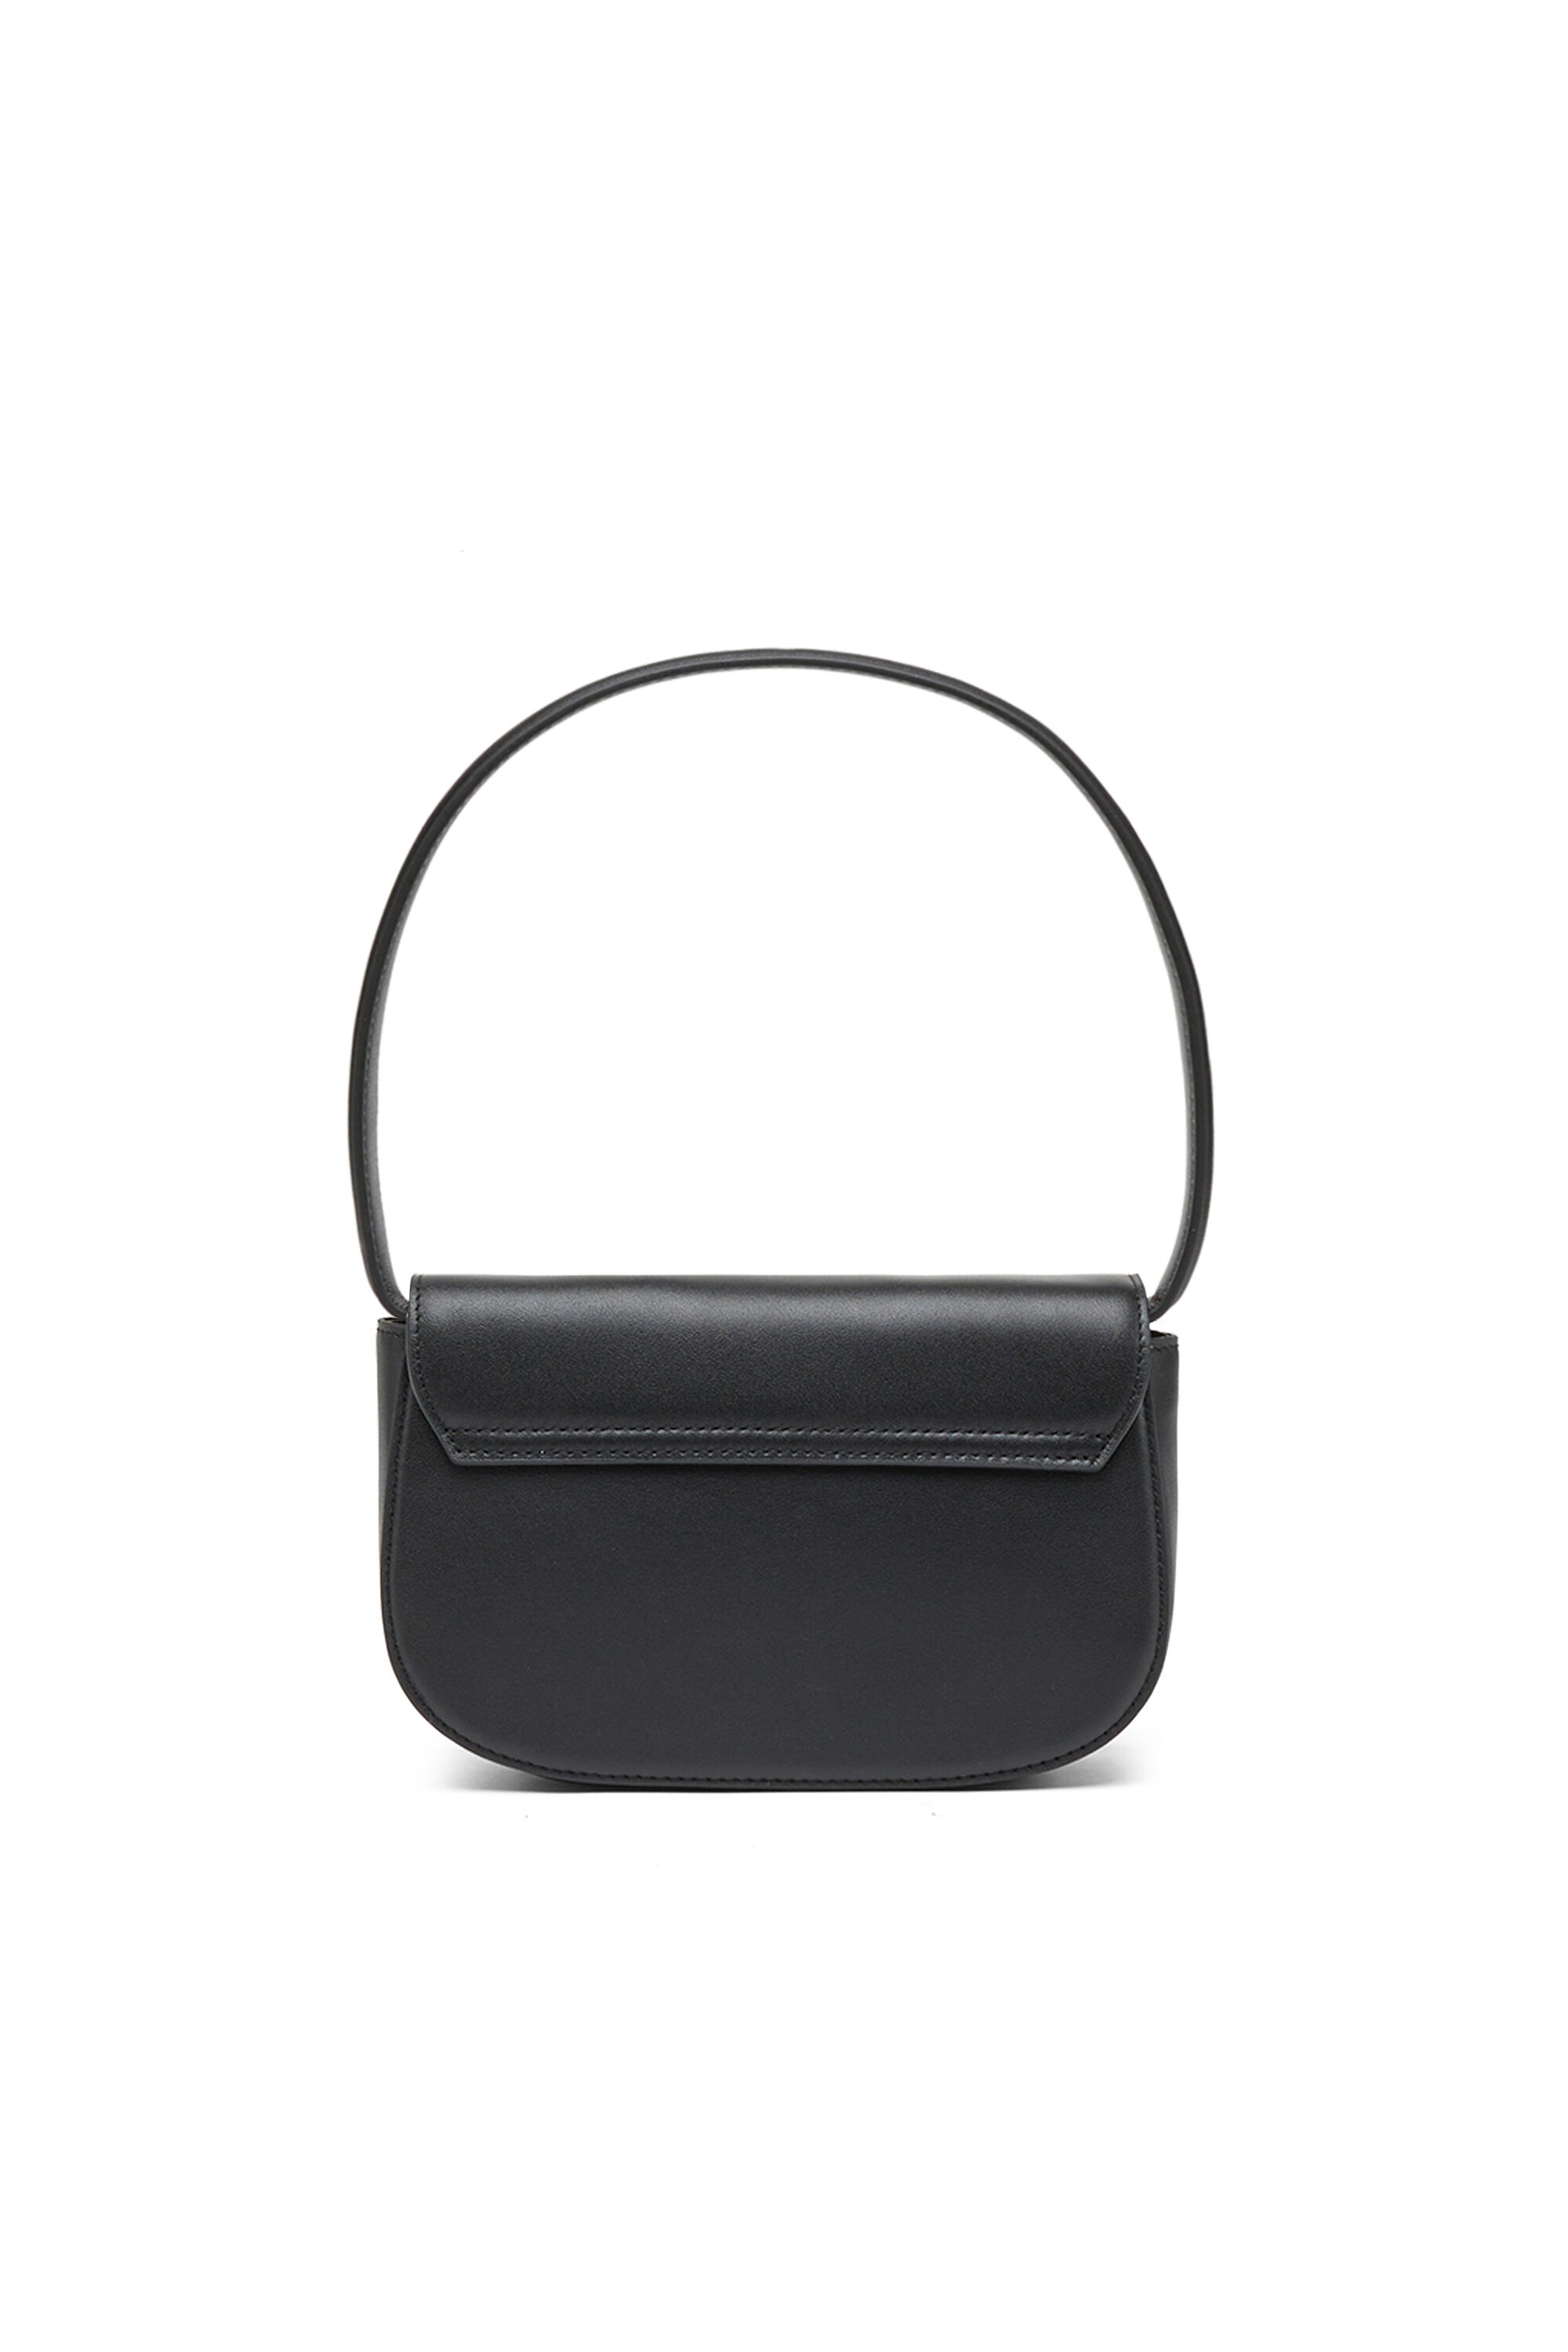 PreOrder Replacement Purse Strap Leather Adjustable Handbag